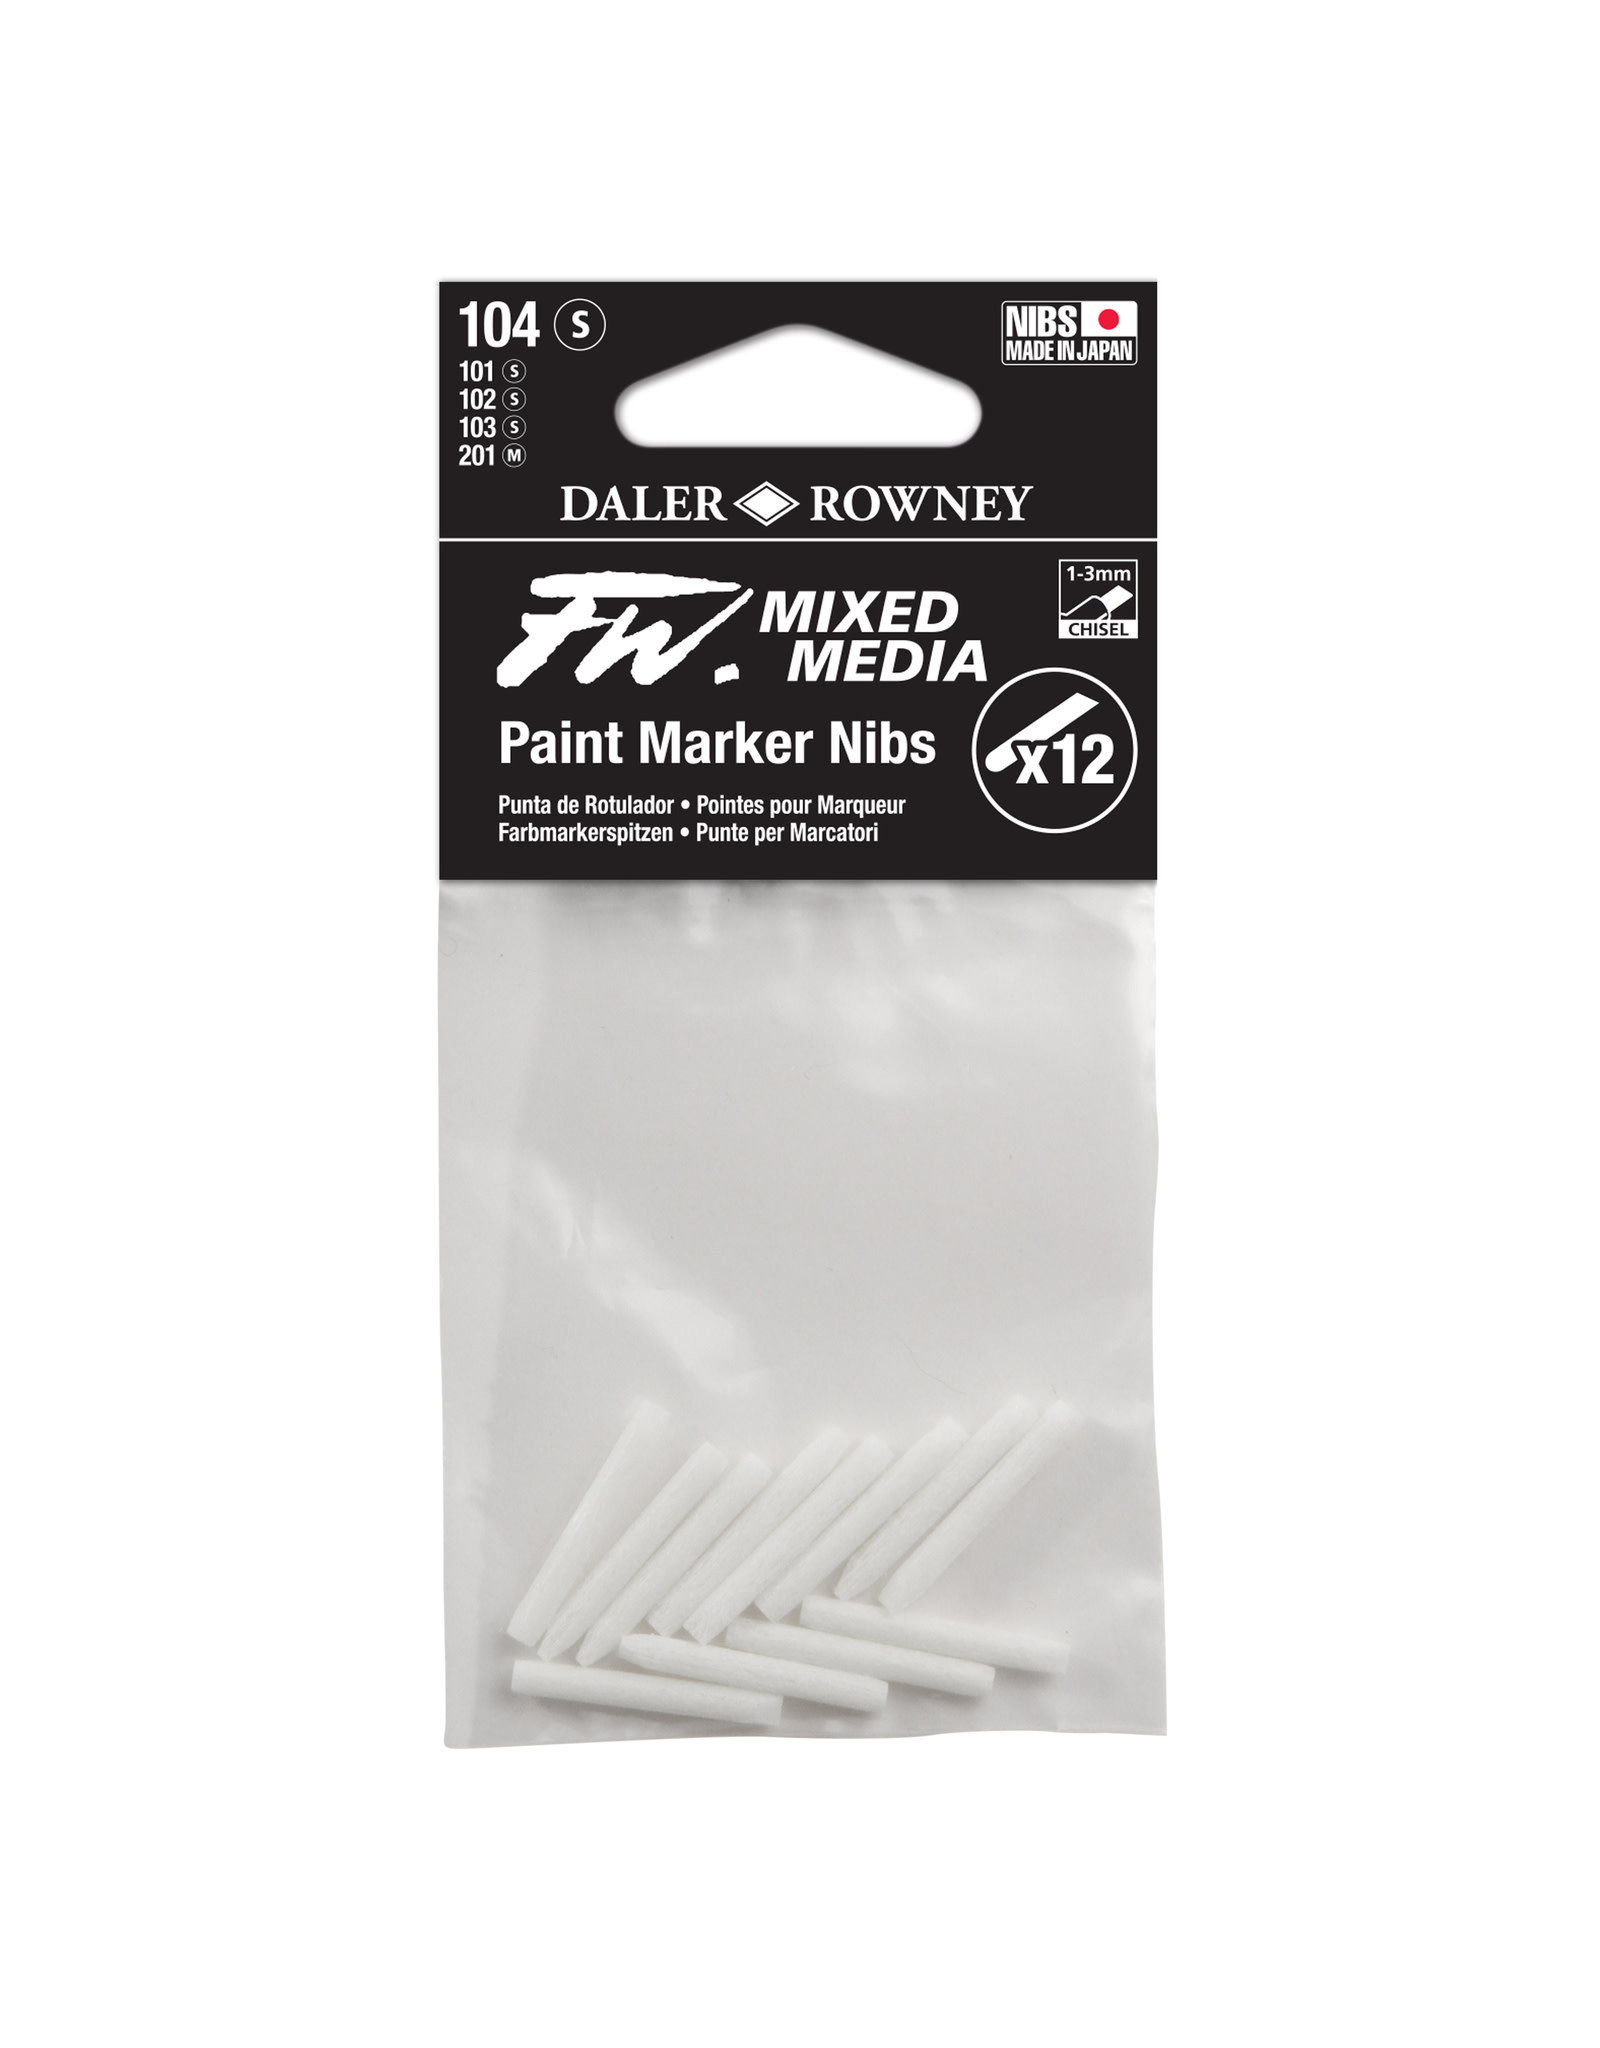 Daler-Rowney Daler-Rowney FW Paint Marker Nib Set of 12, 1-3mm, Chisel